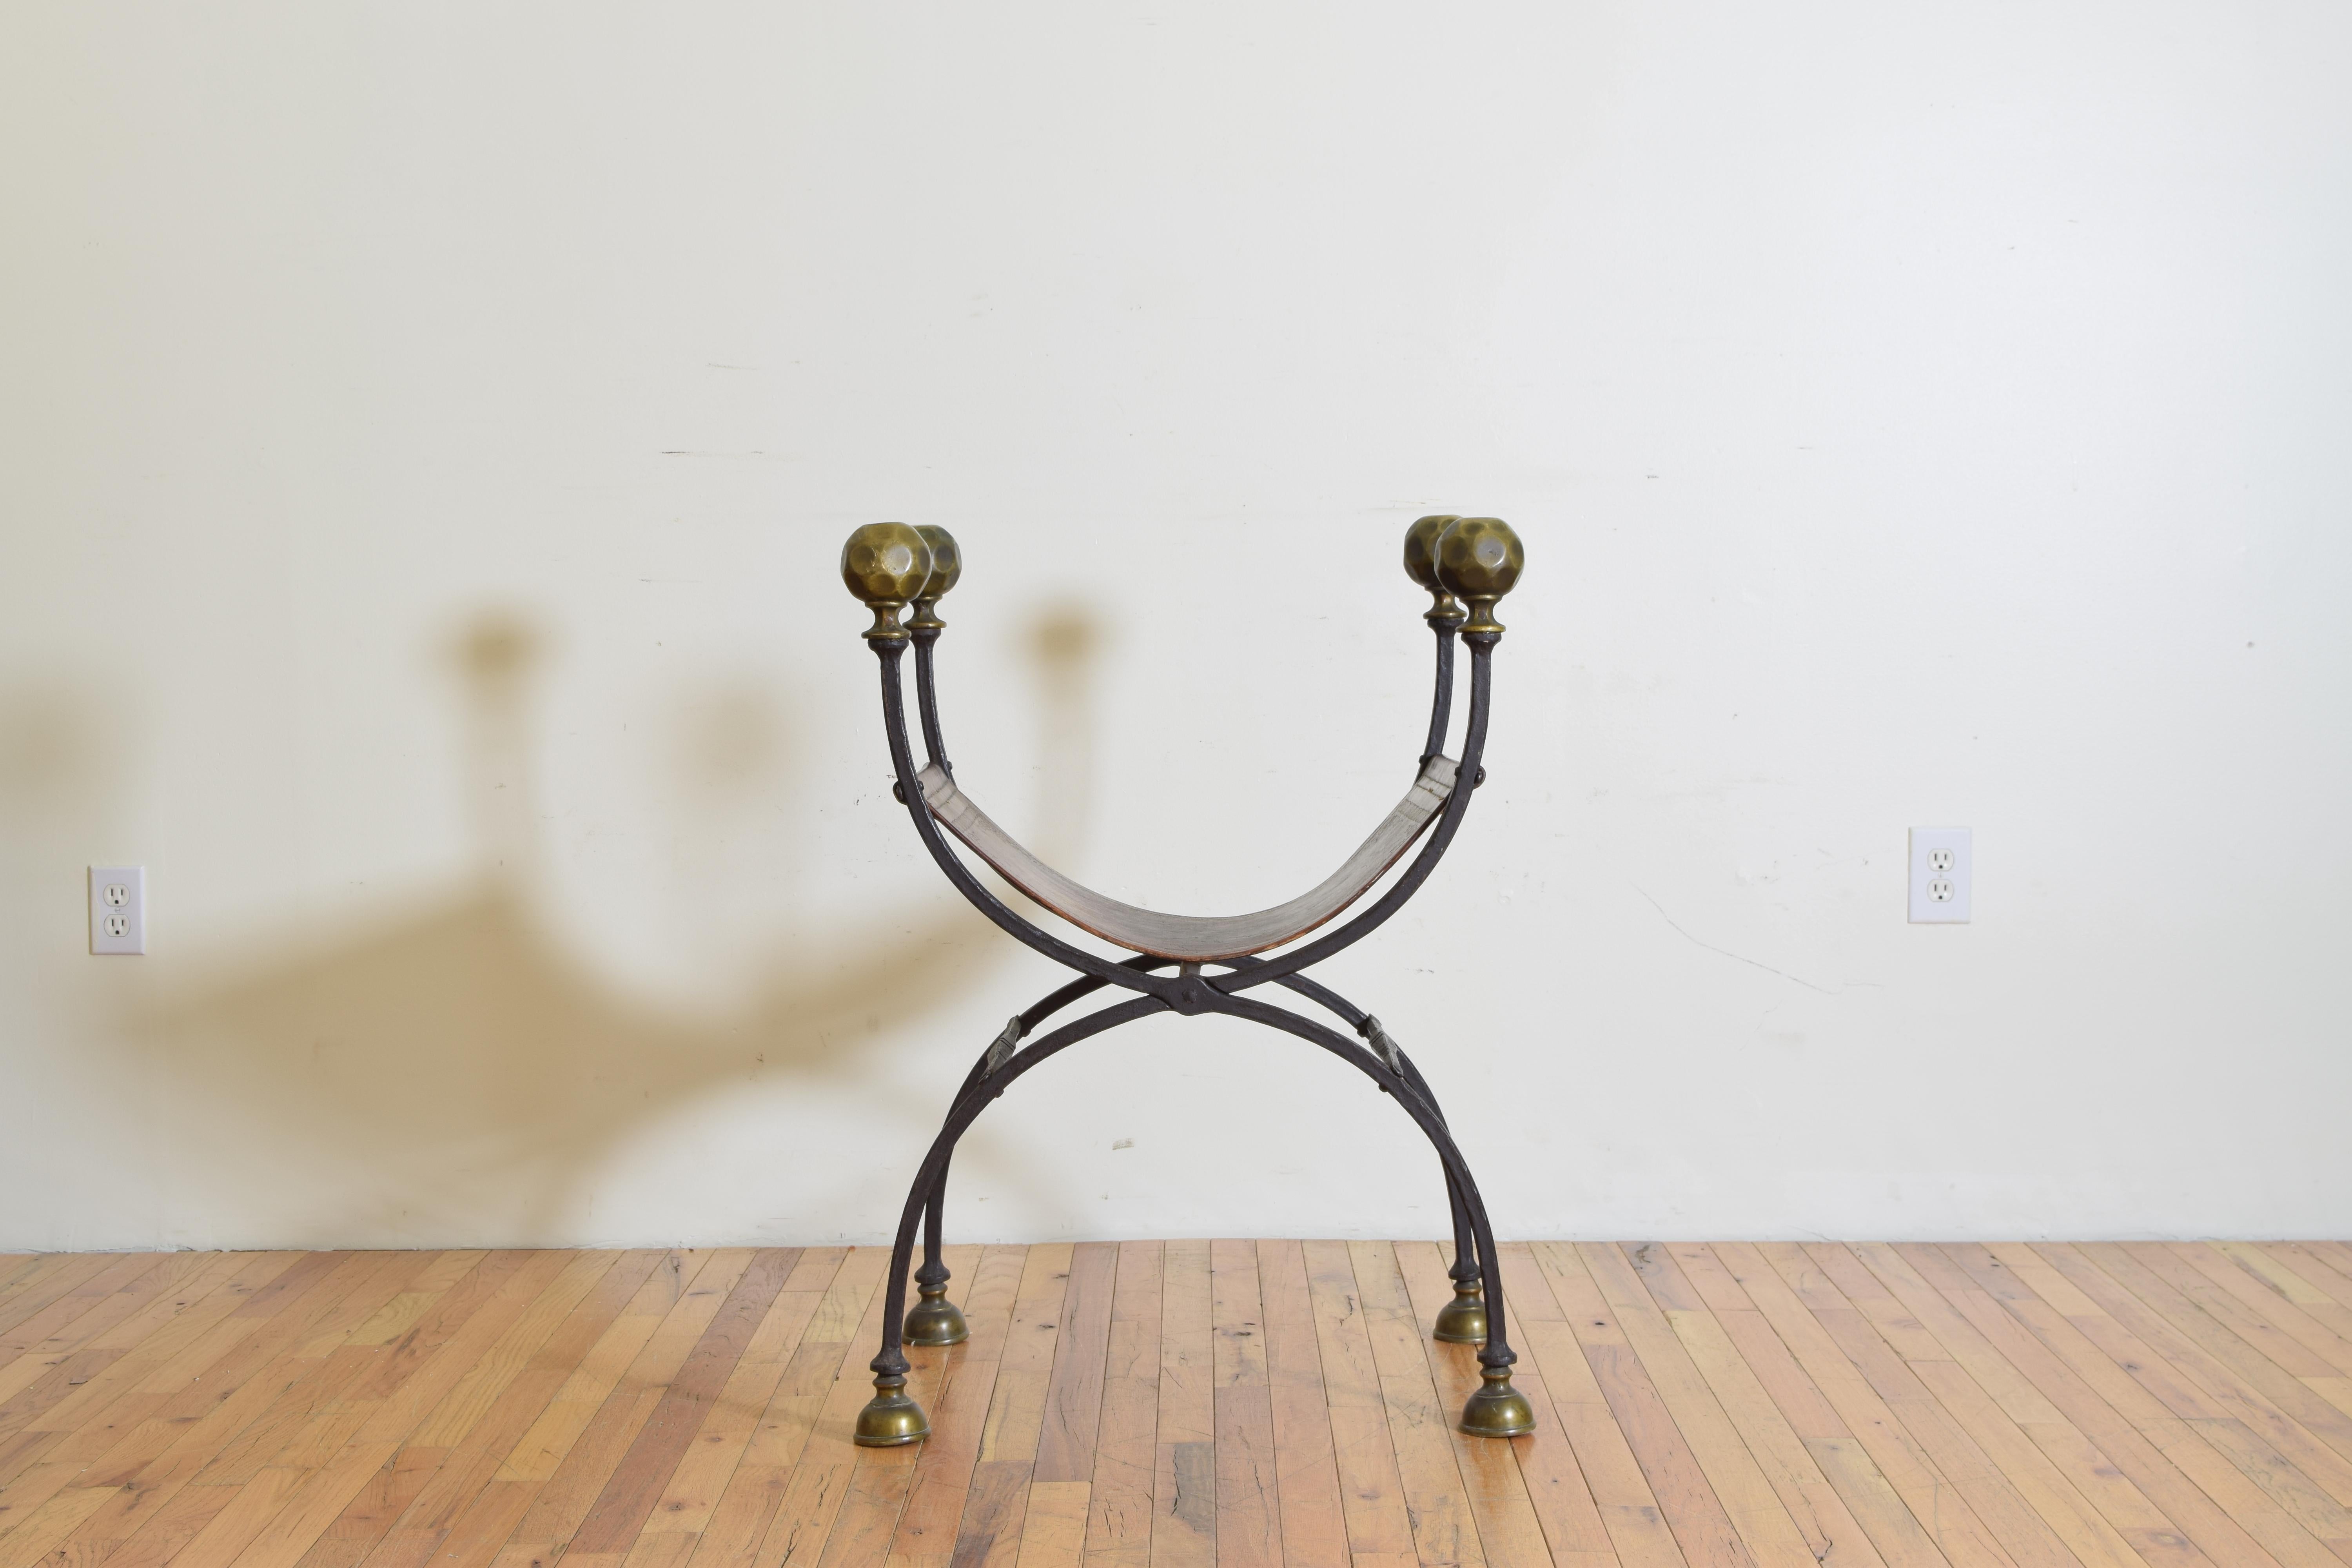 Renaissance Revival Italian Renaissance Wrought Iron, Bronze, and Leather Curule Form Chair